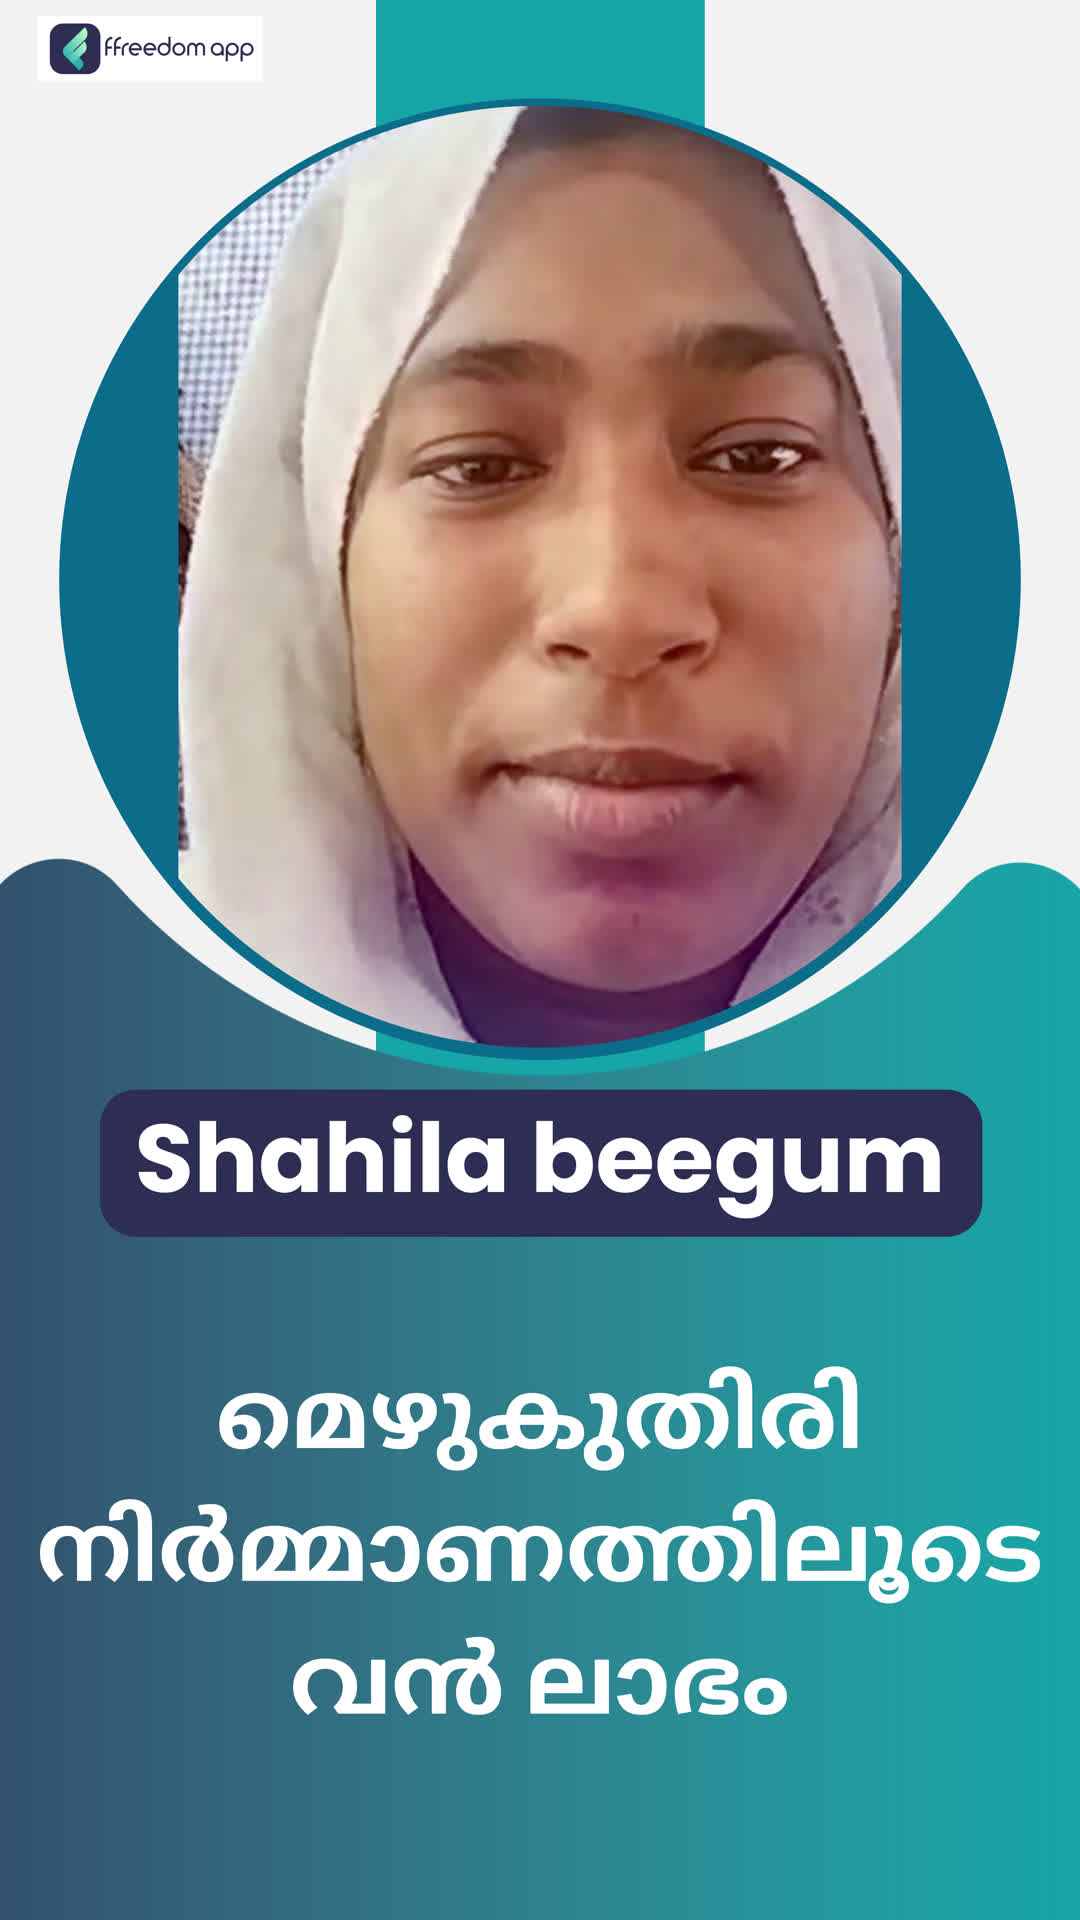 Shahila beegum's Honest Review of ffreedom app  Kerala